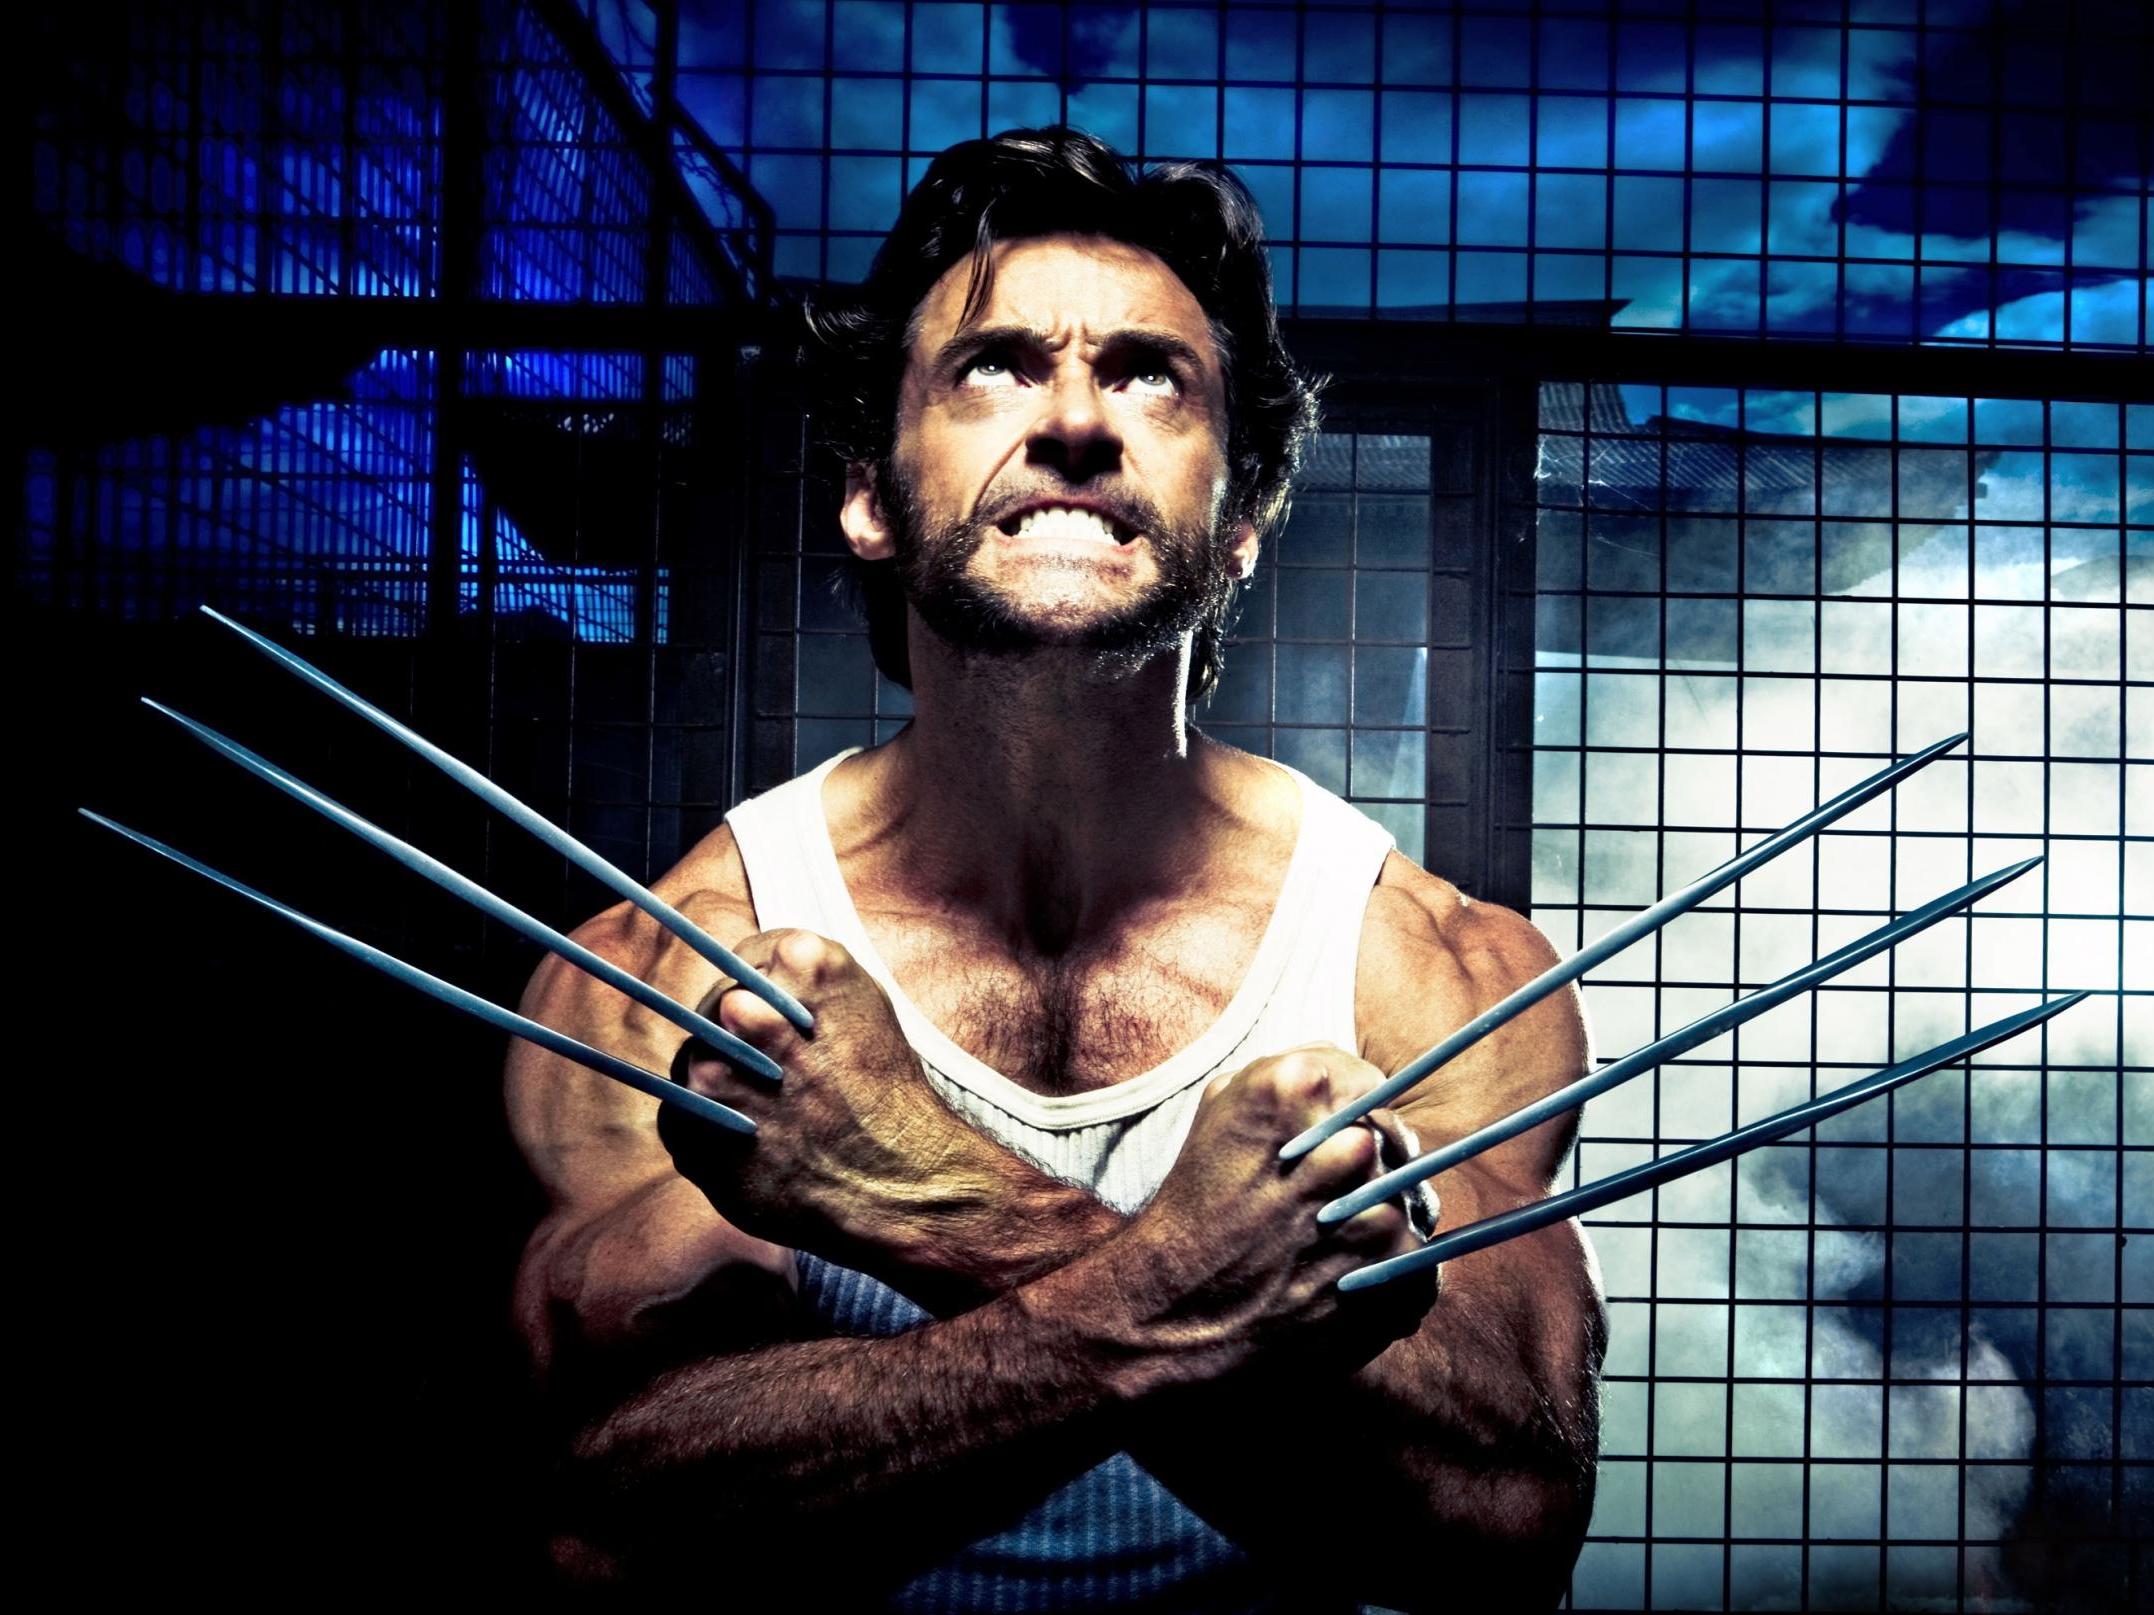 20th Century Fox logo - X-Men Origins: Wolverine interna…